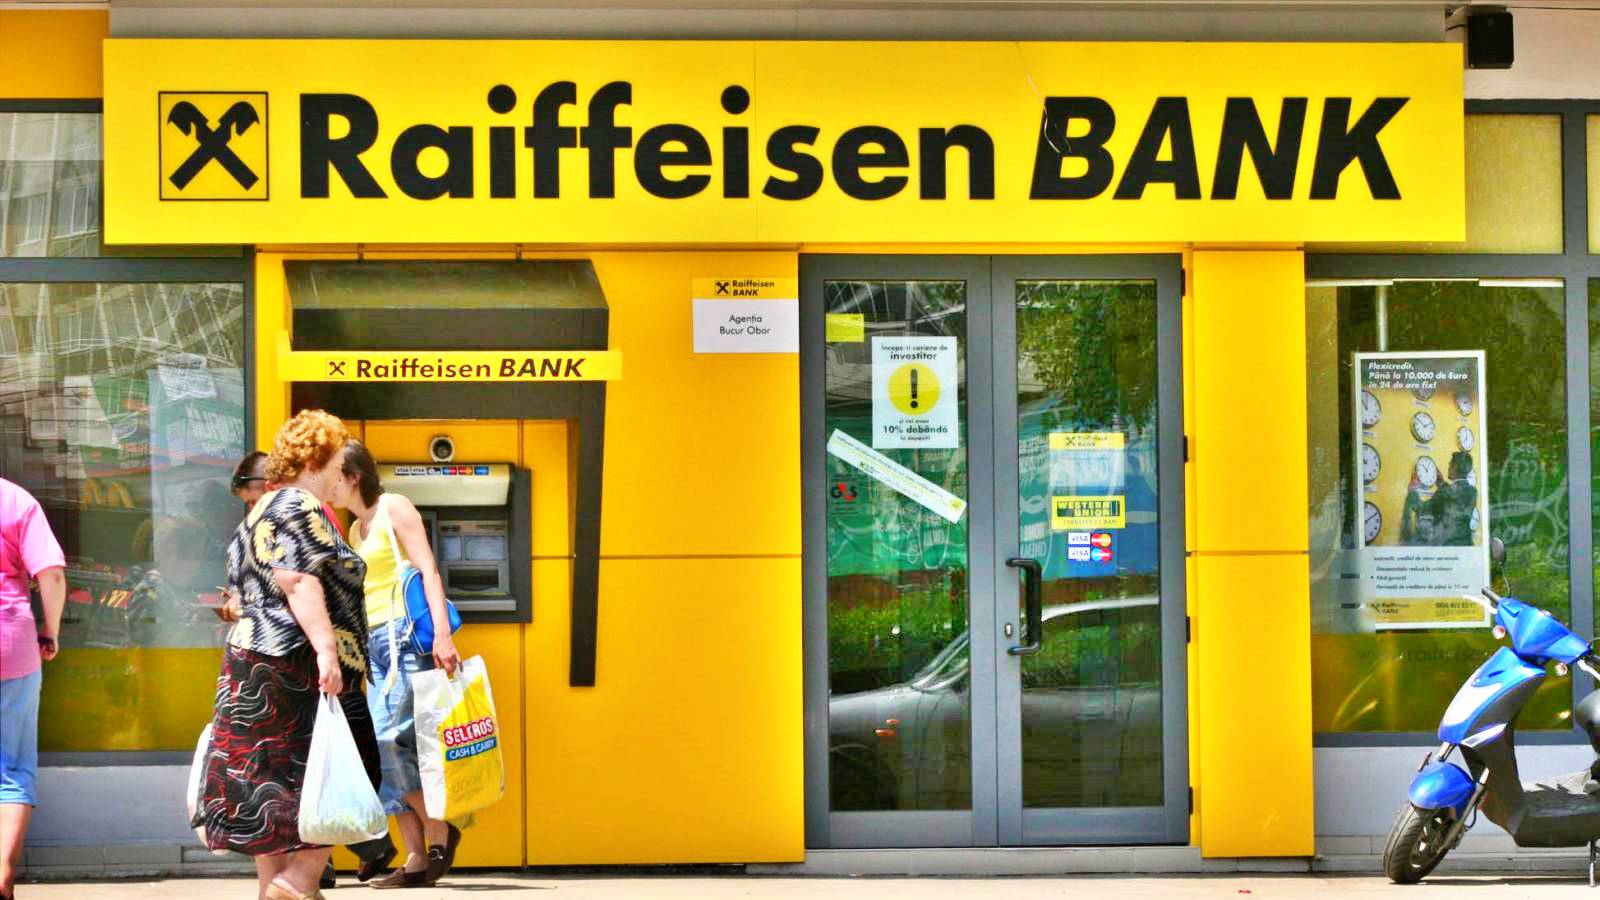 Raiffeisen Bank LAST MINUTE-melding richt zich op alle Roemeense klanten